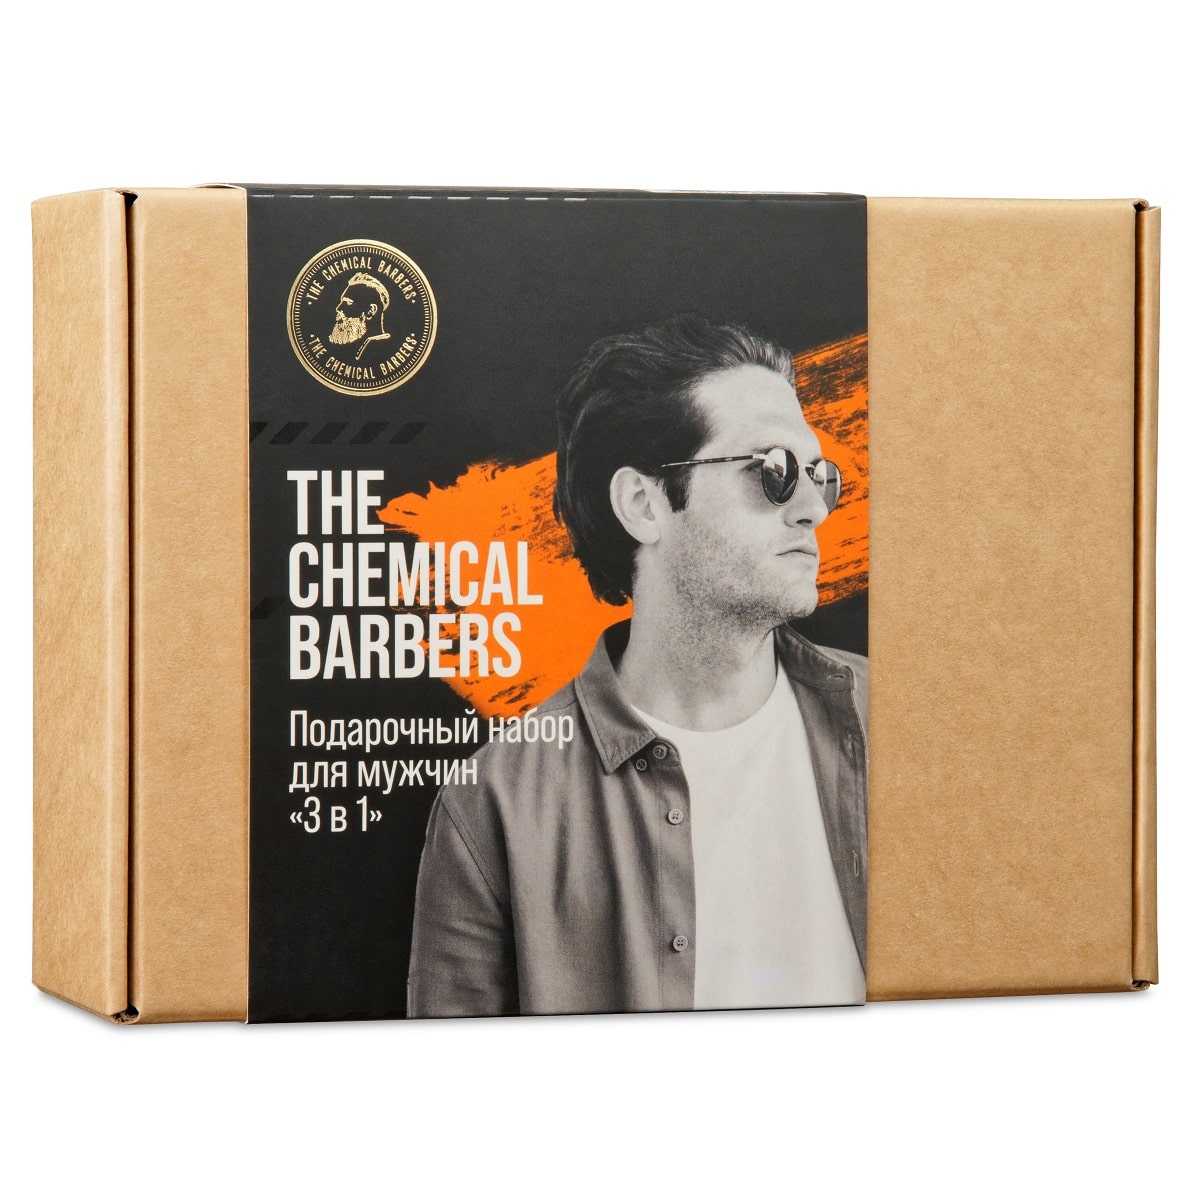 THE CHEMICAl BARBERS Подарочный набор для мужчин 3 в 1: гель для душа, 350 мл + шампунь, 350 мл +гель для мытья, 350 мл (THE CHEMICAl BARBERS, Наборы)